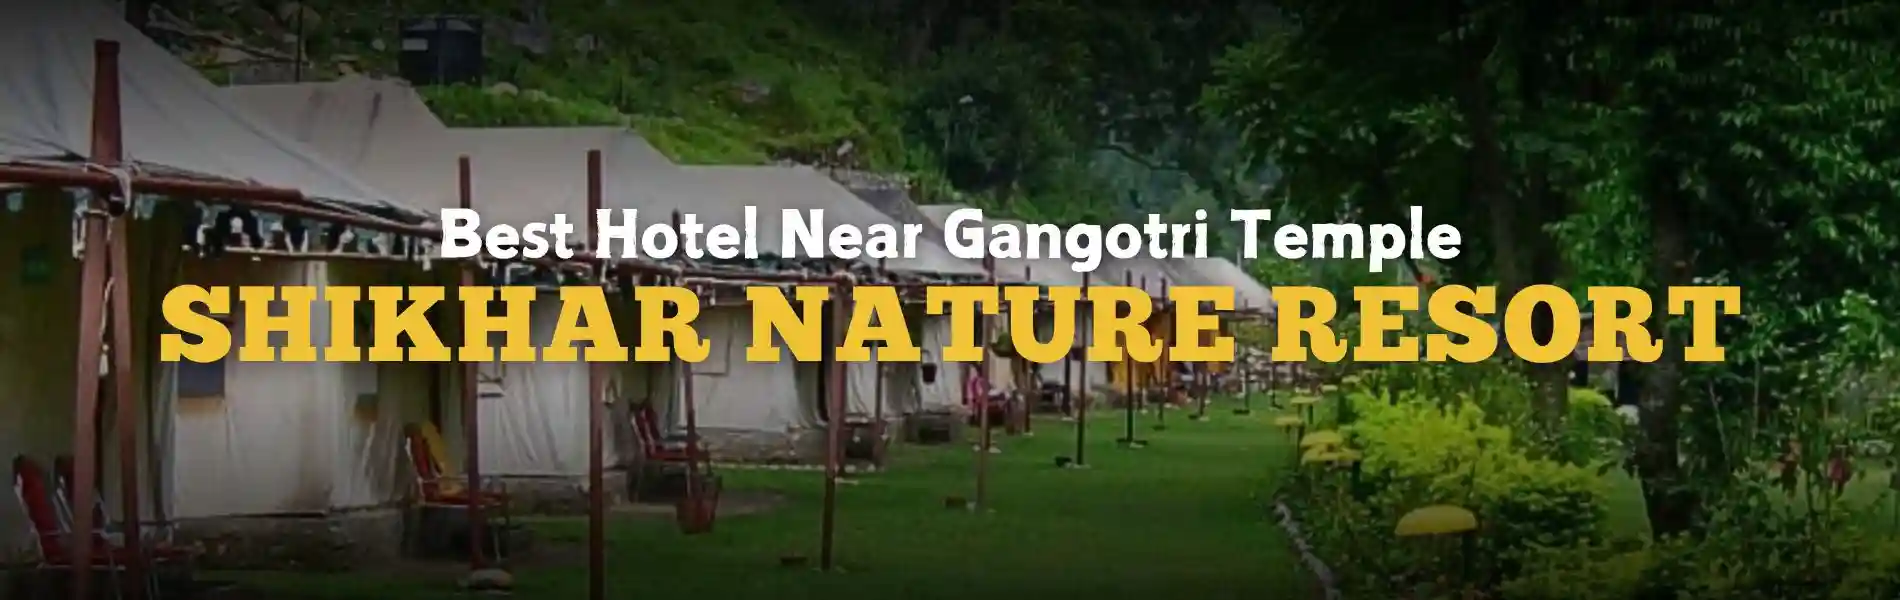 Hotels near gangotri temple